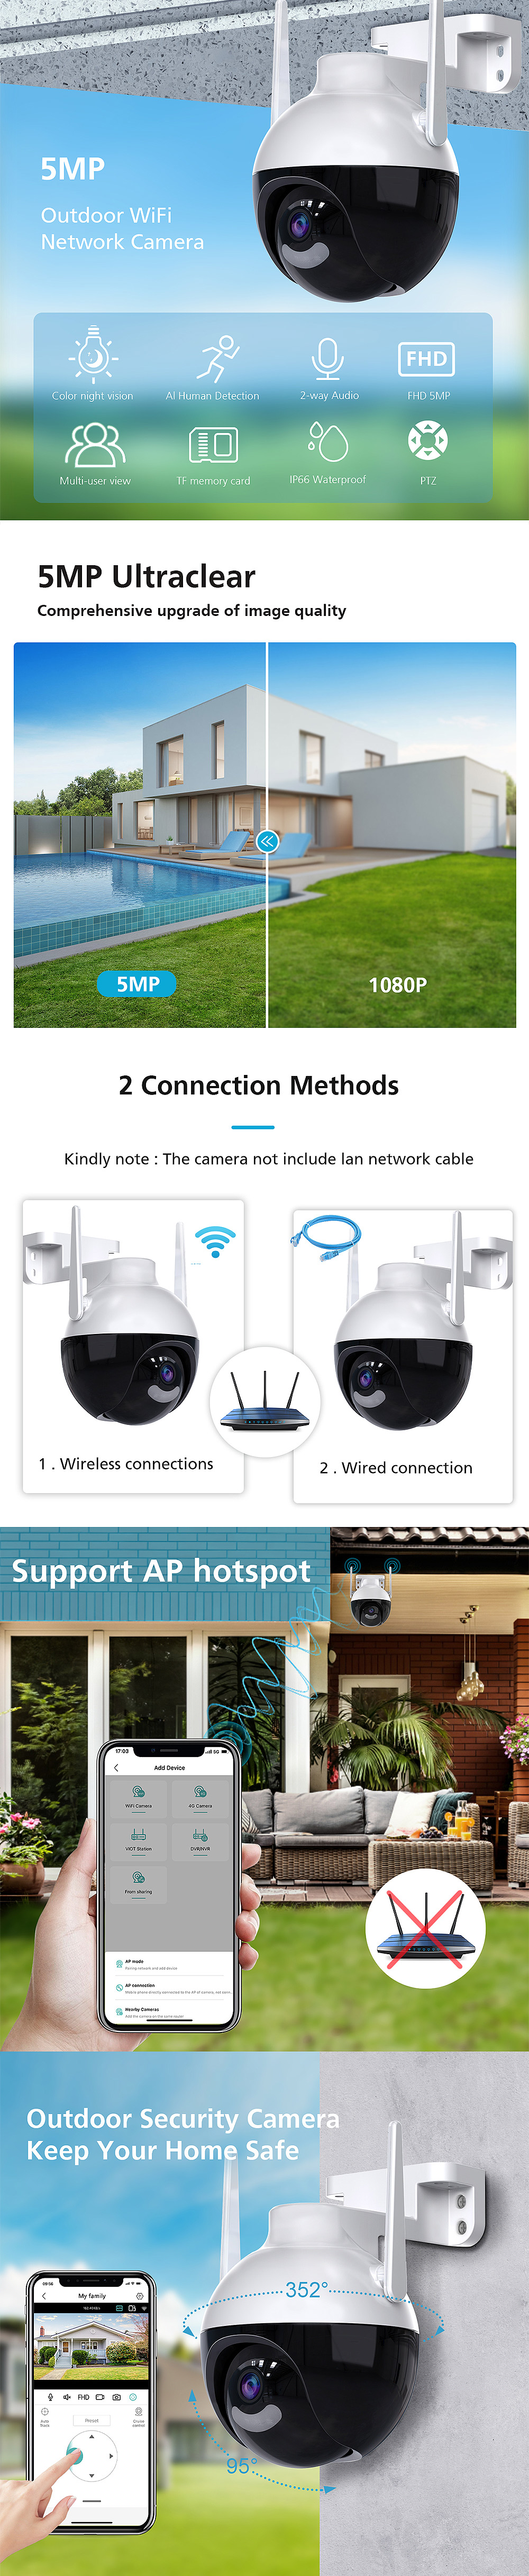 5MP-Outdoor-WiFi-Security-Camera-Wireless-PTZ-Surveillance-Video-Cam-Two-Way-Audio-Night-Vision-Moti-1973771-1